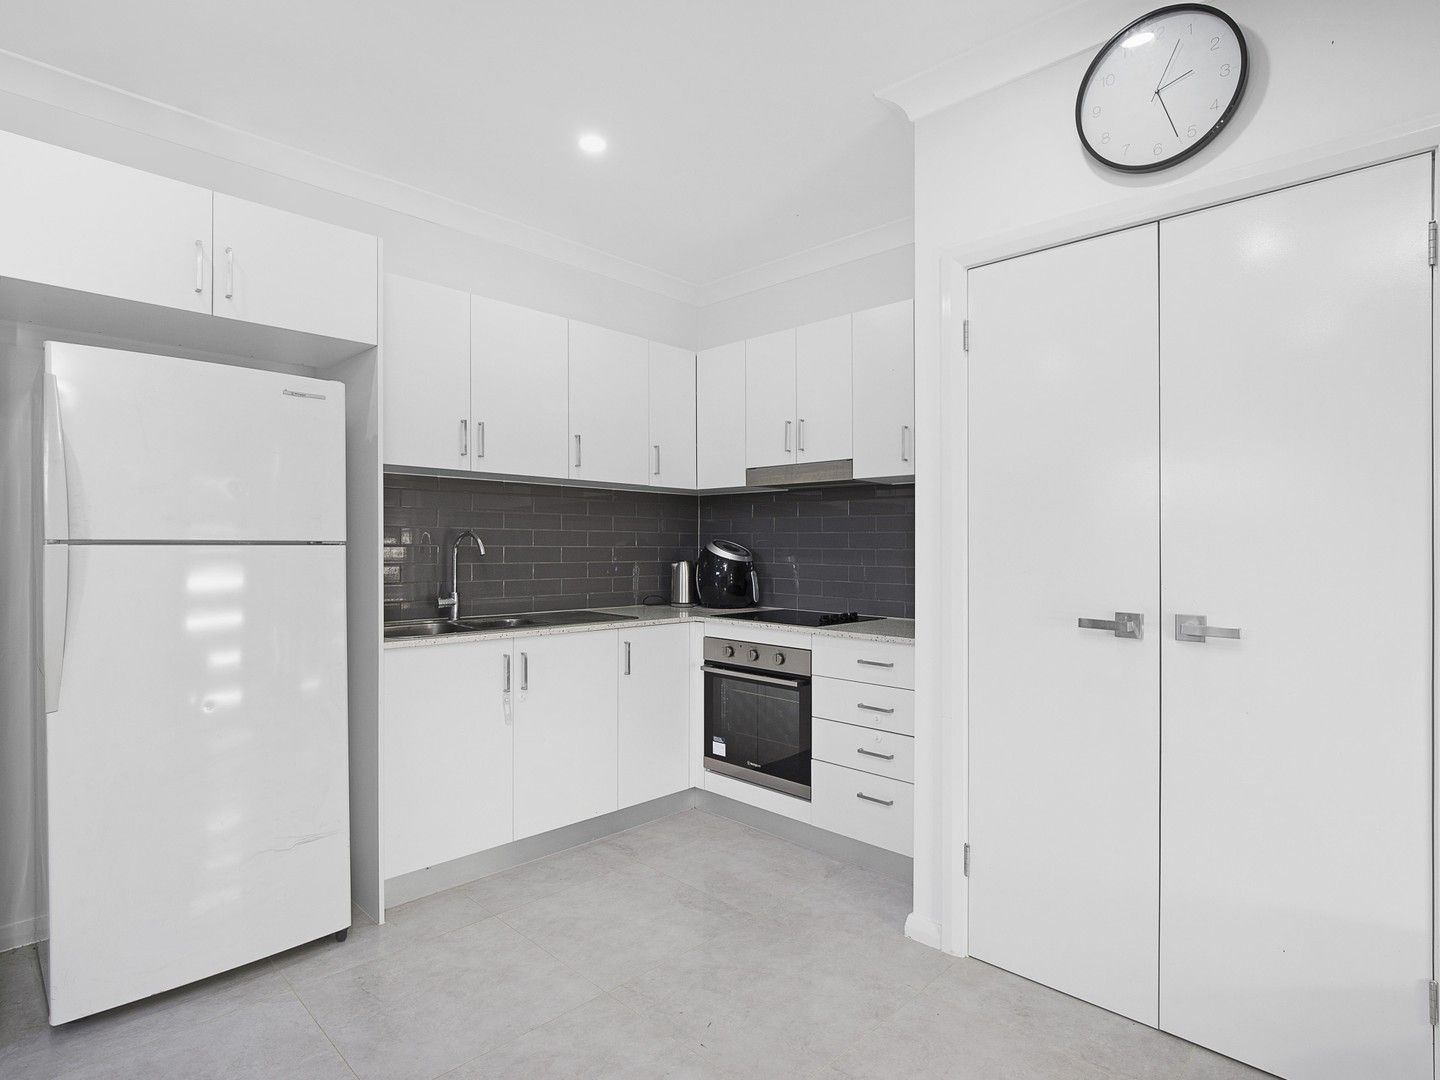 2 bedrooms Villa in 3A Rowley Place AIRDS NSW, 2560